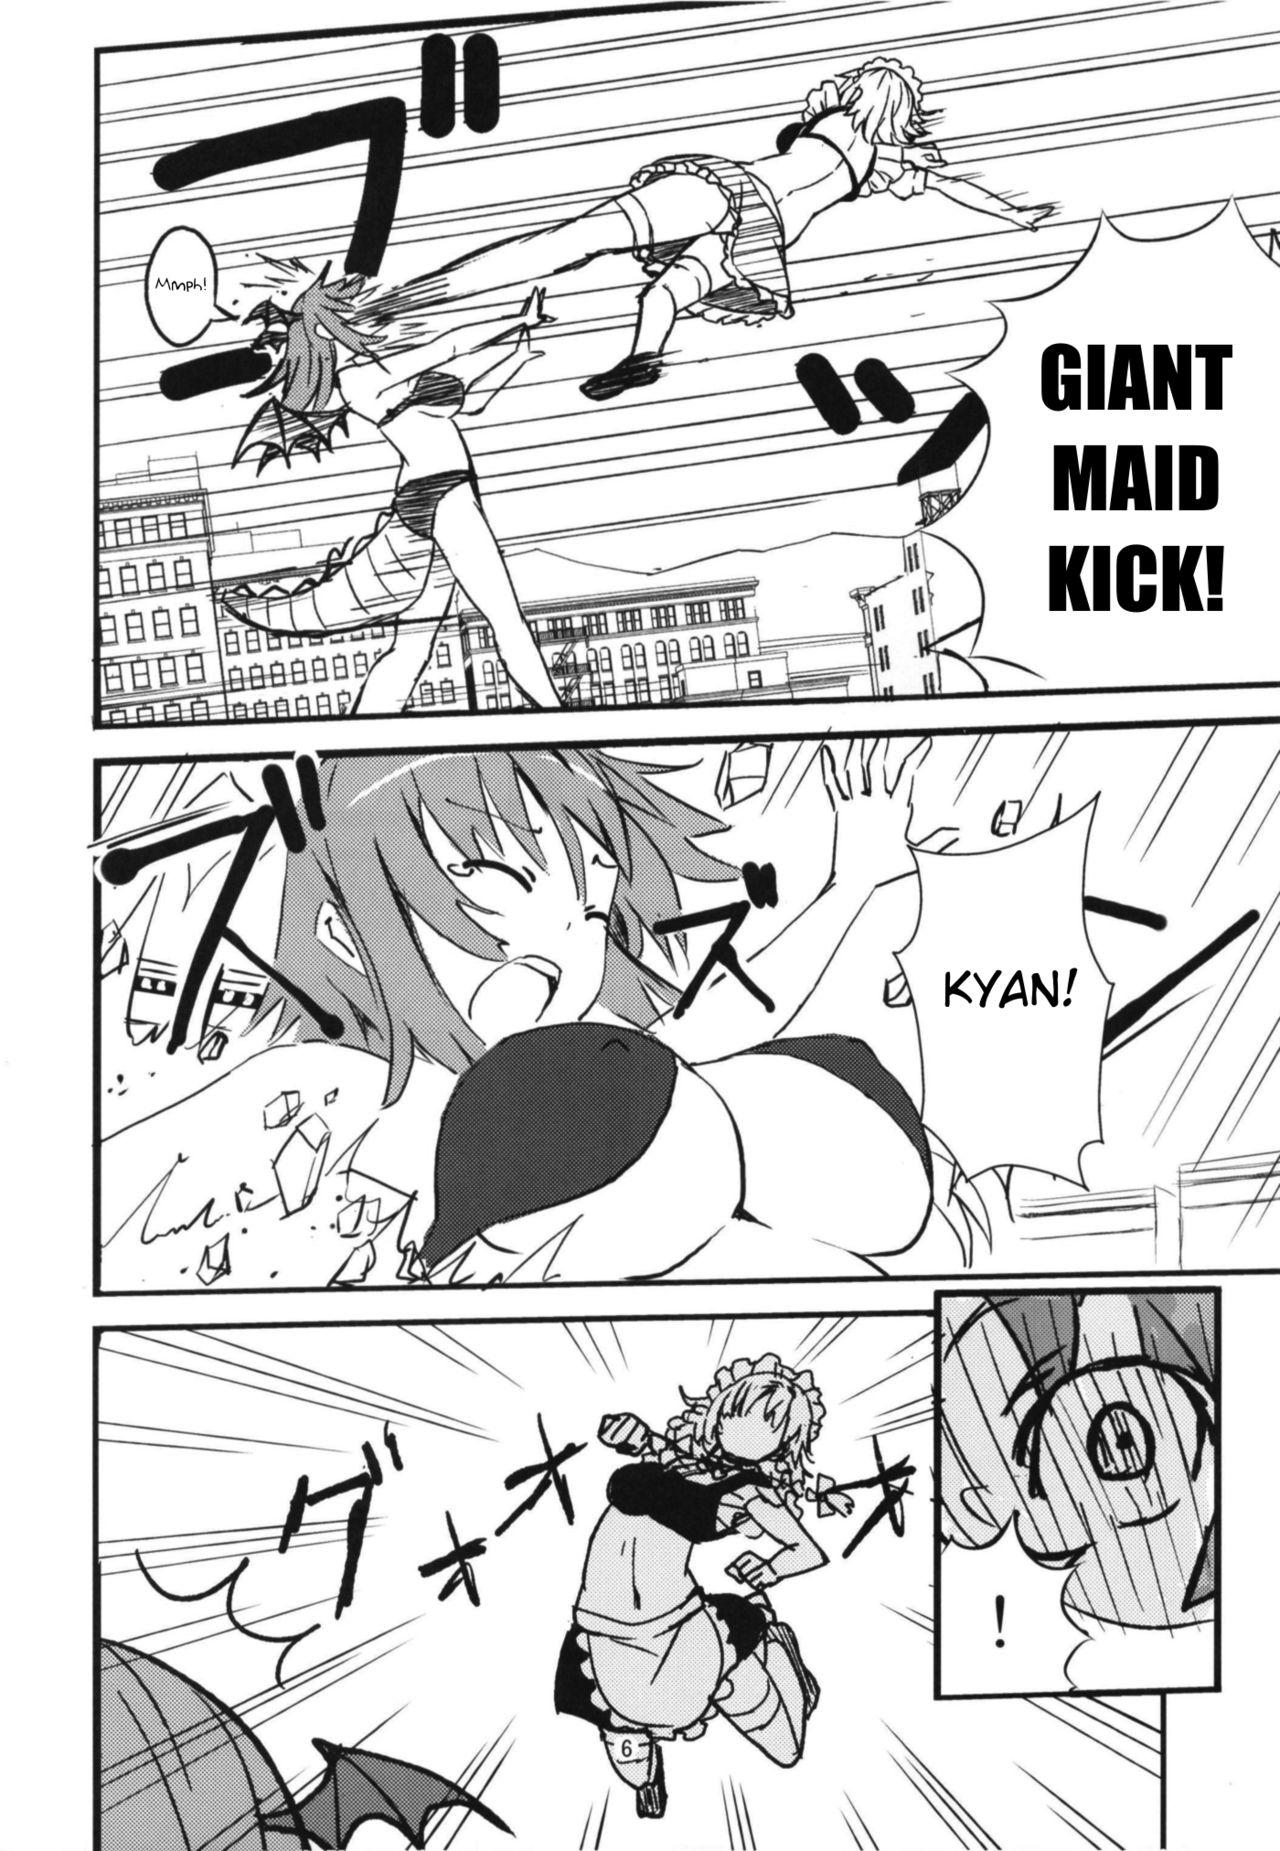 Mega Sakuya vs Giant Koakuma 4